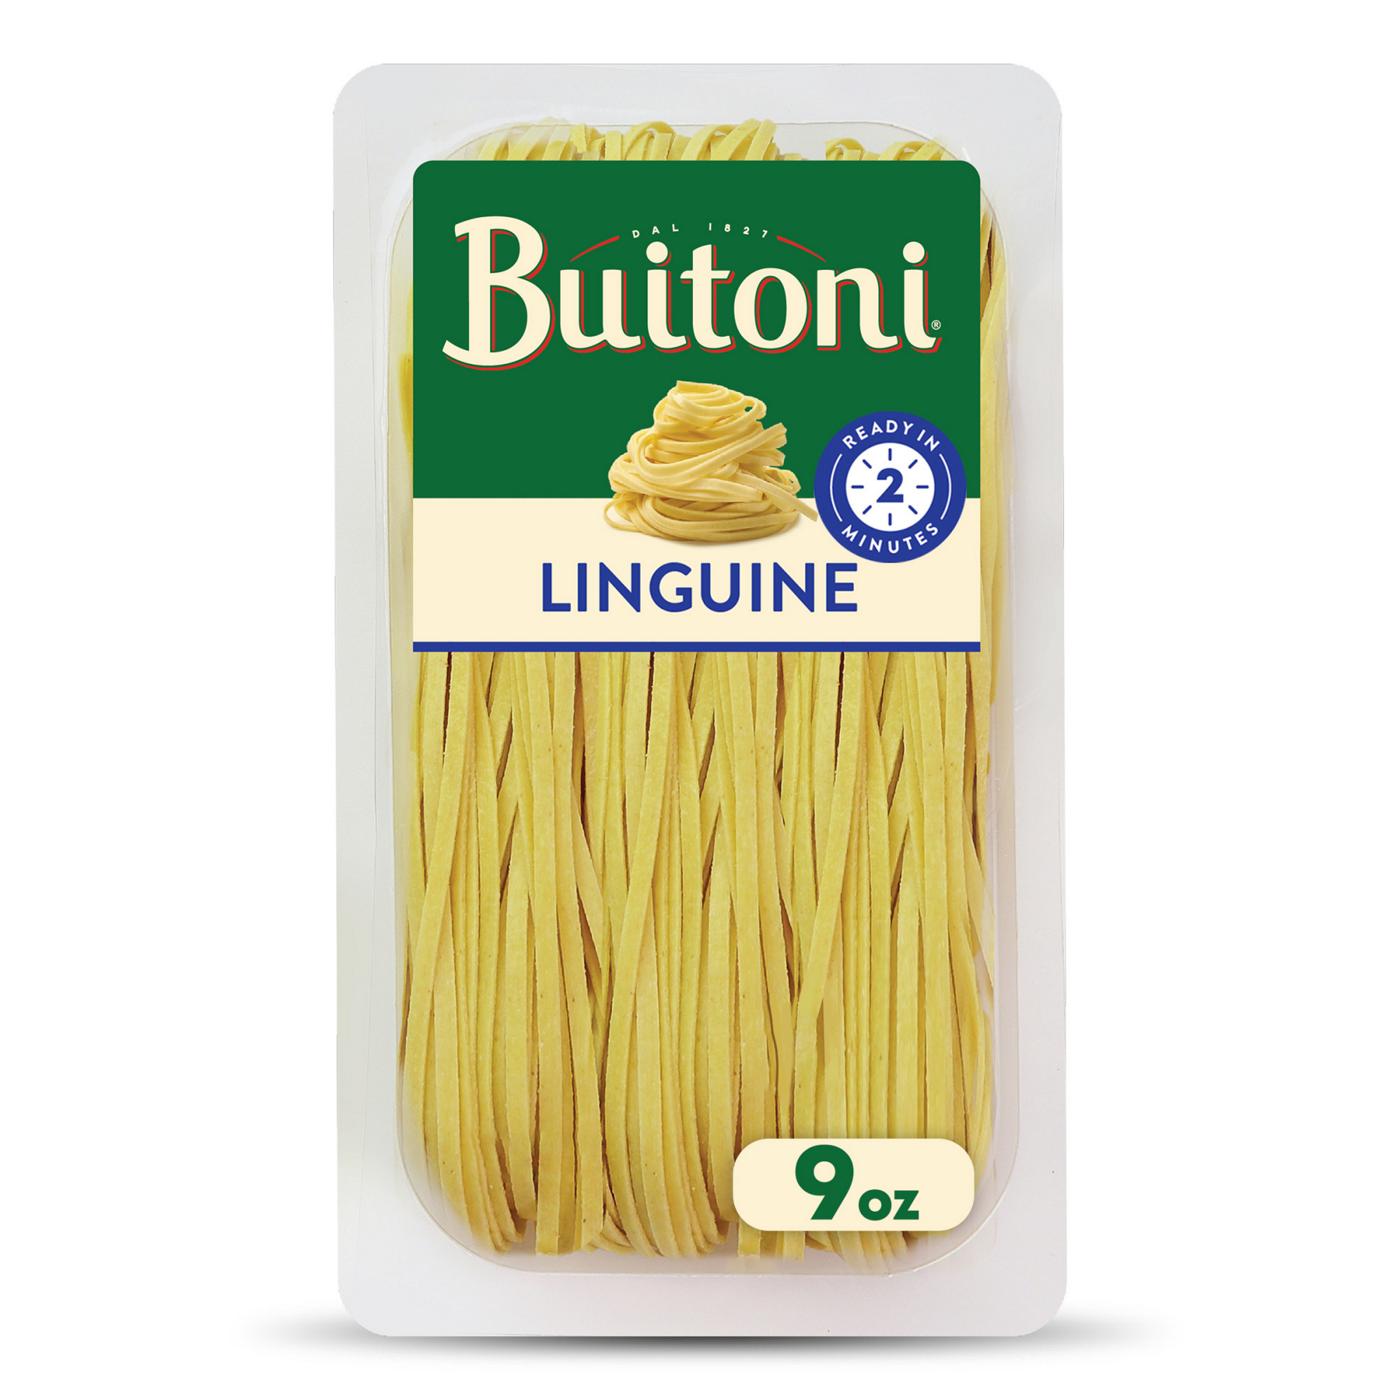 Buitoni Linguine; image 1 of 5